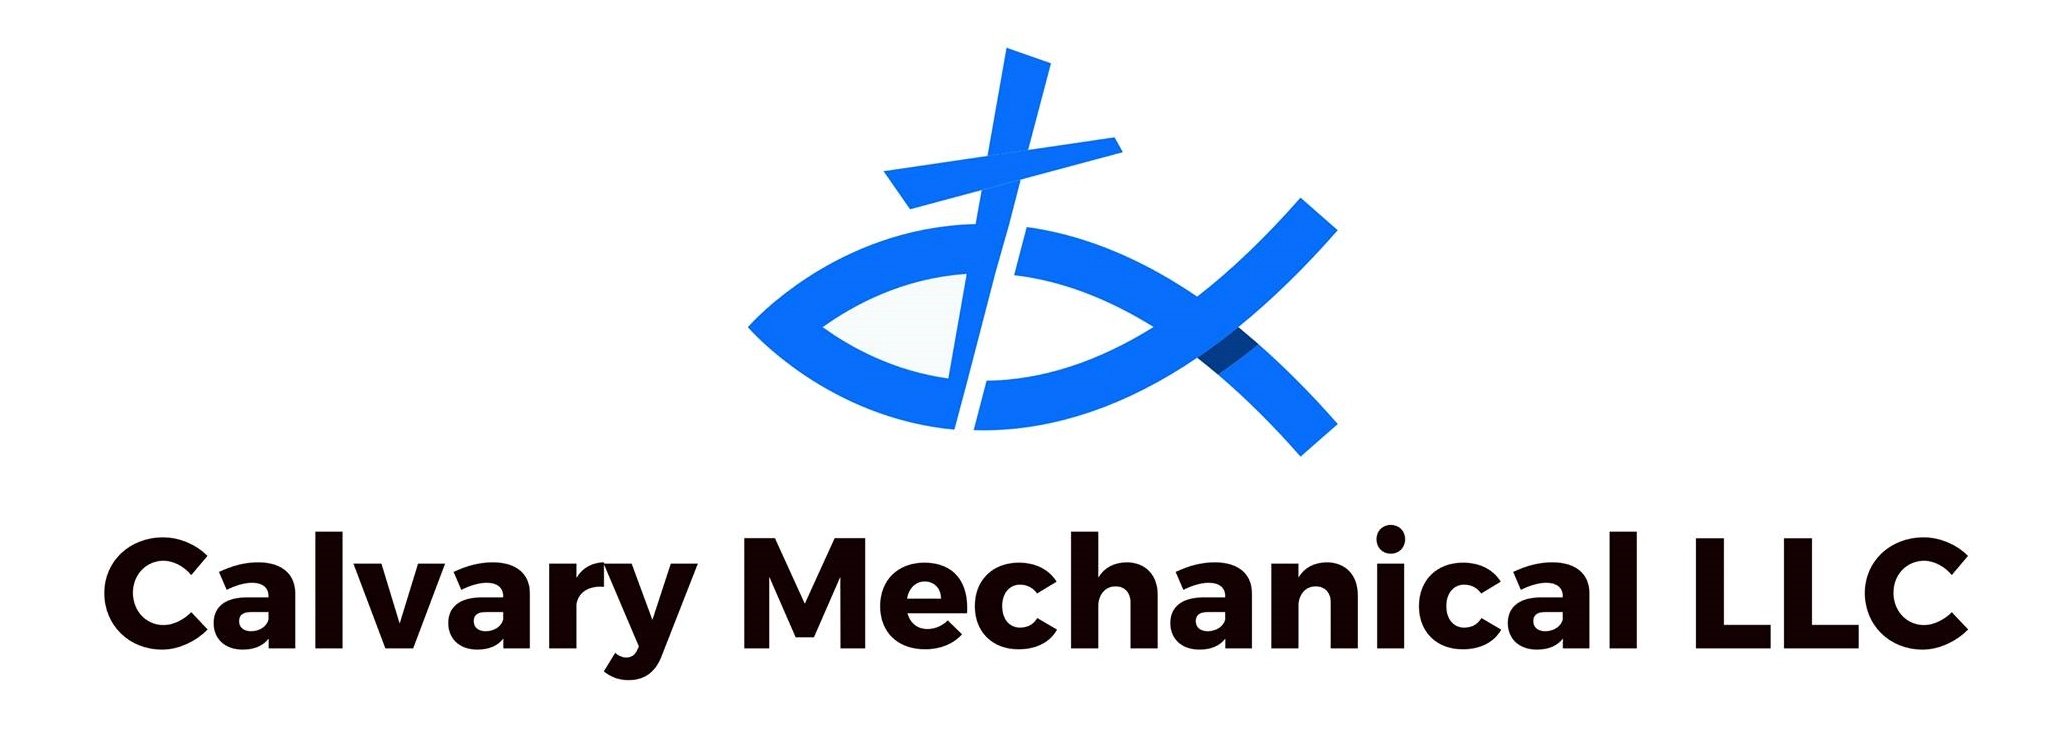 Calvary Mechanical LLC Logo